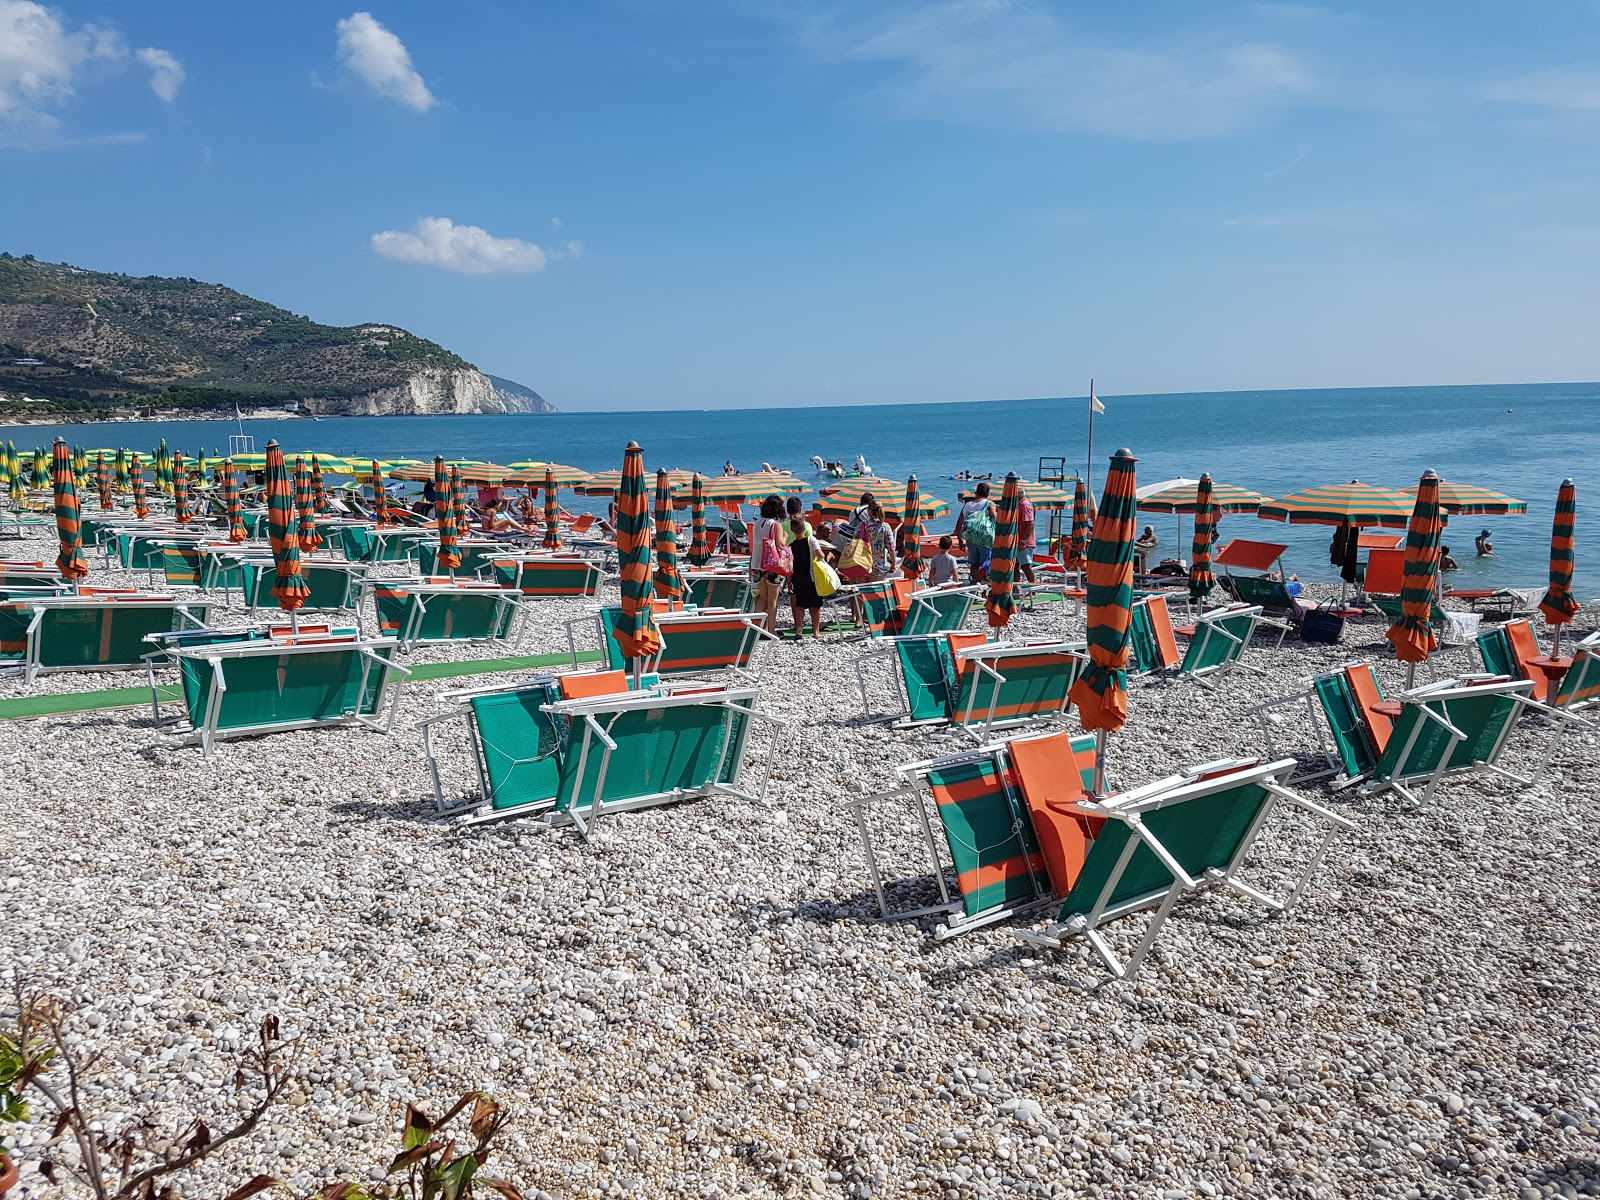 Foto de Spiaggia di Piana di Mattinata - lugar popular entre os apreciadores de relaxamento